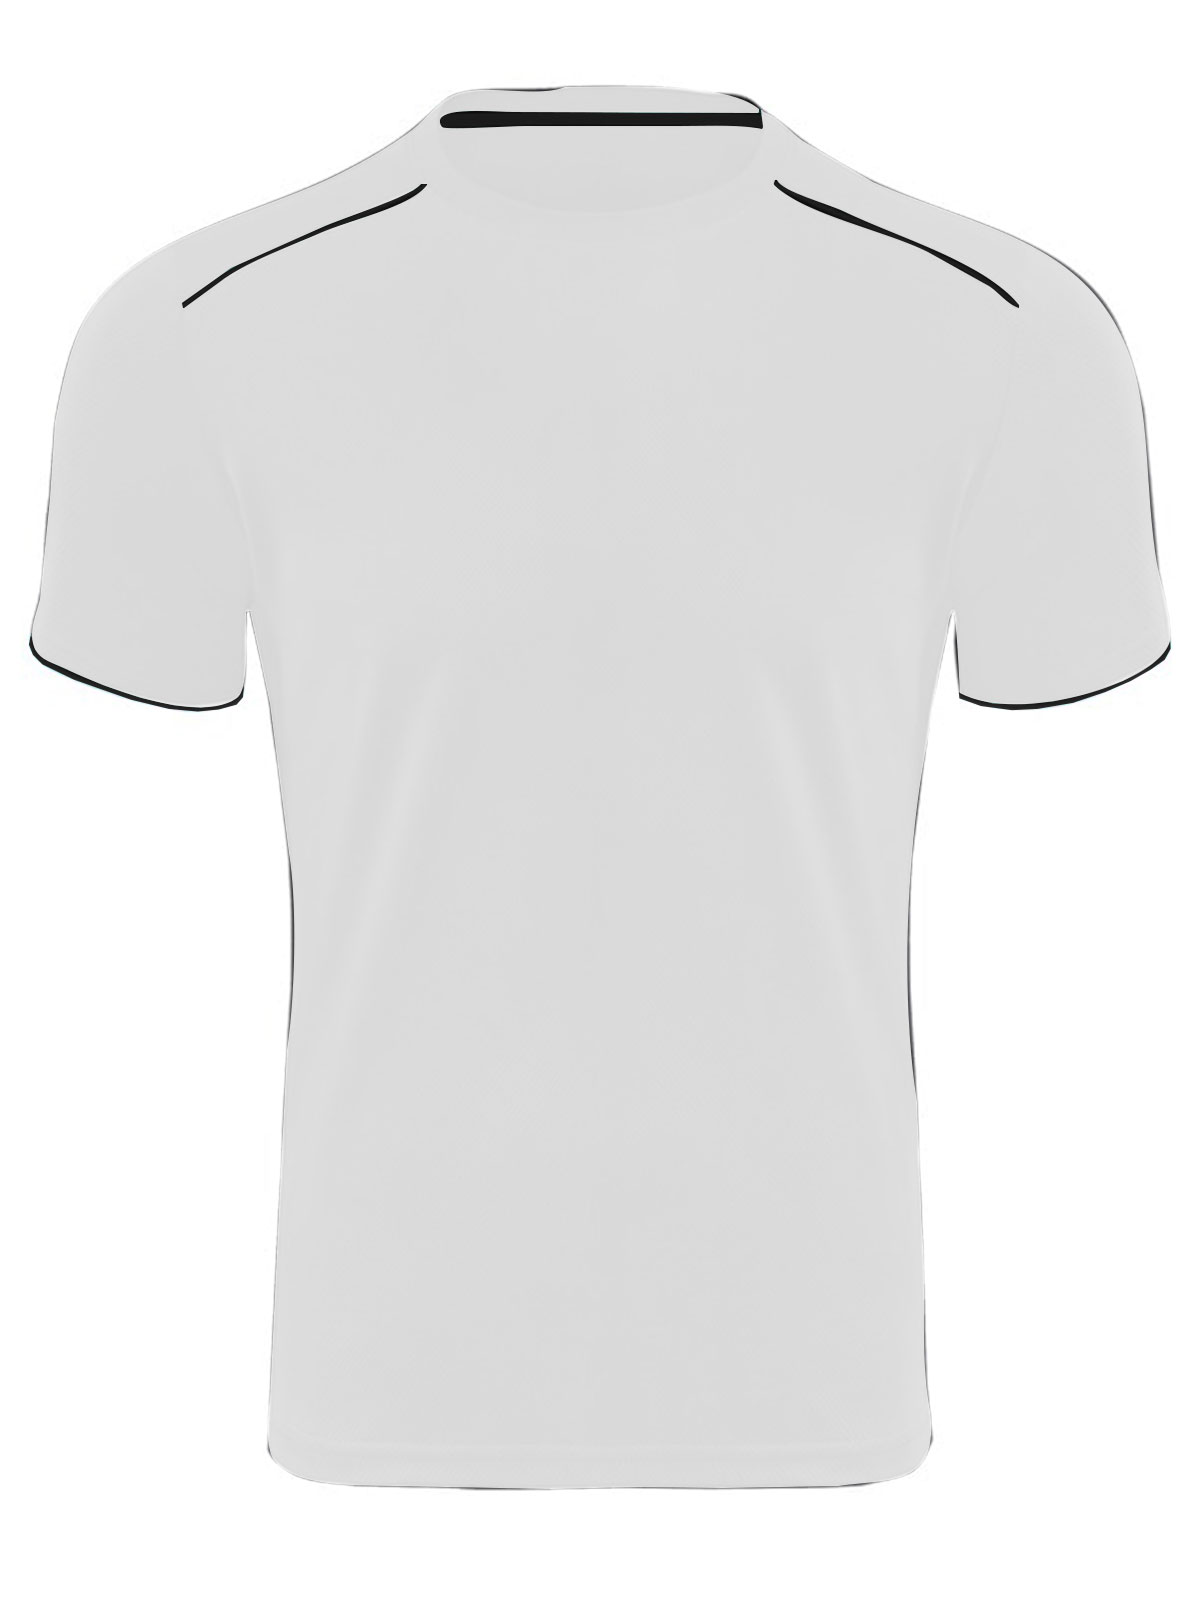 bicolor-performance-t-shirt-white-black.webp